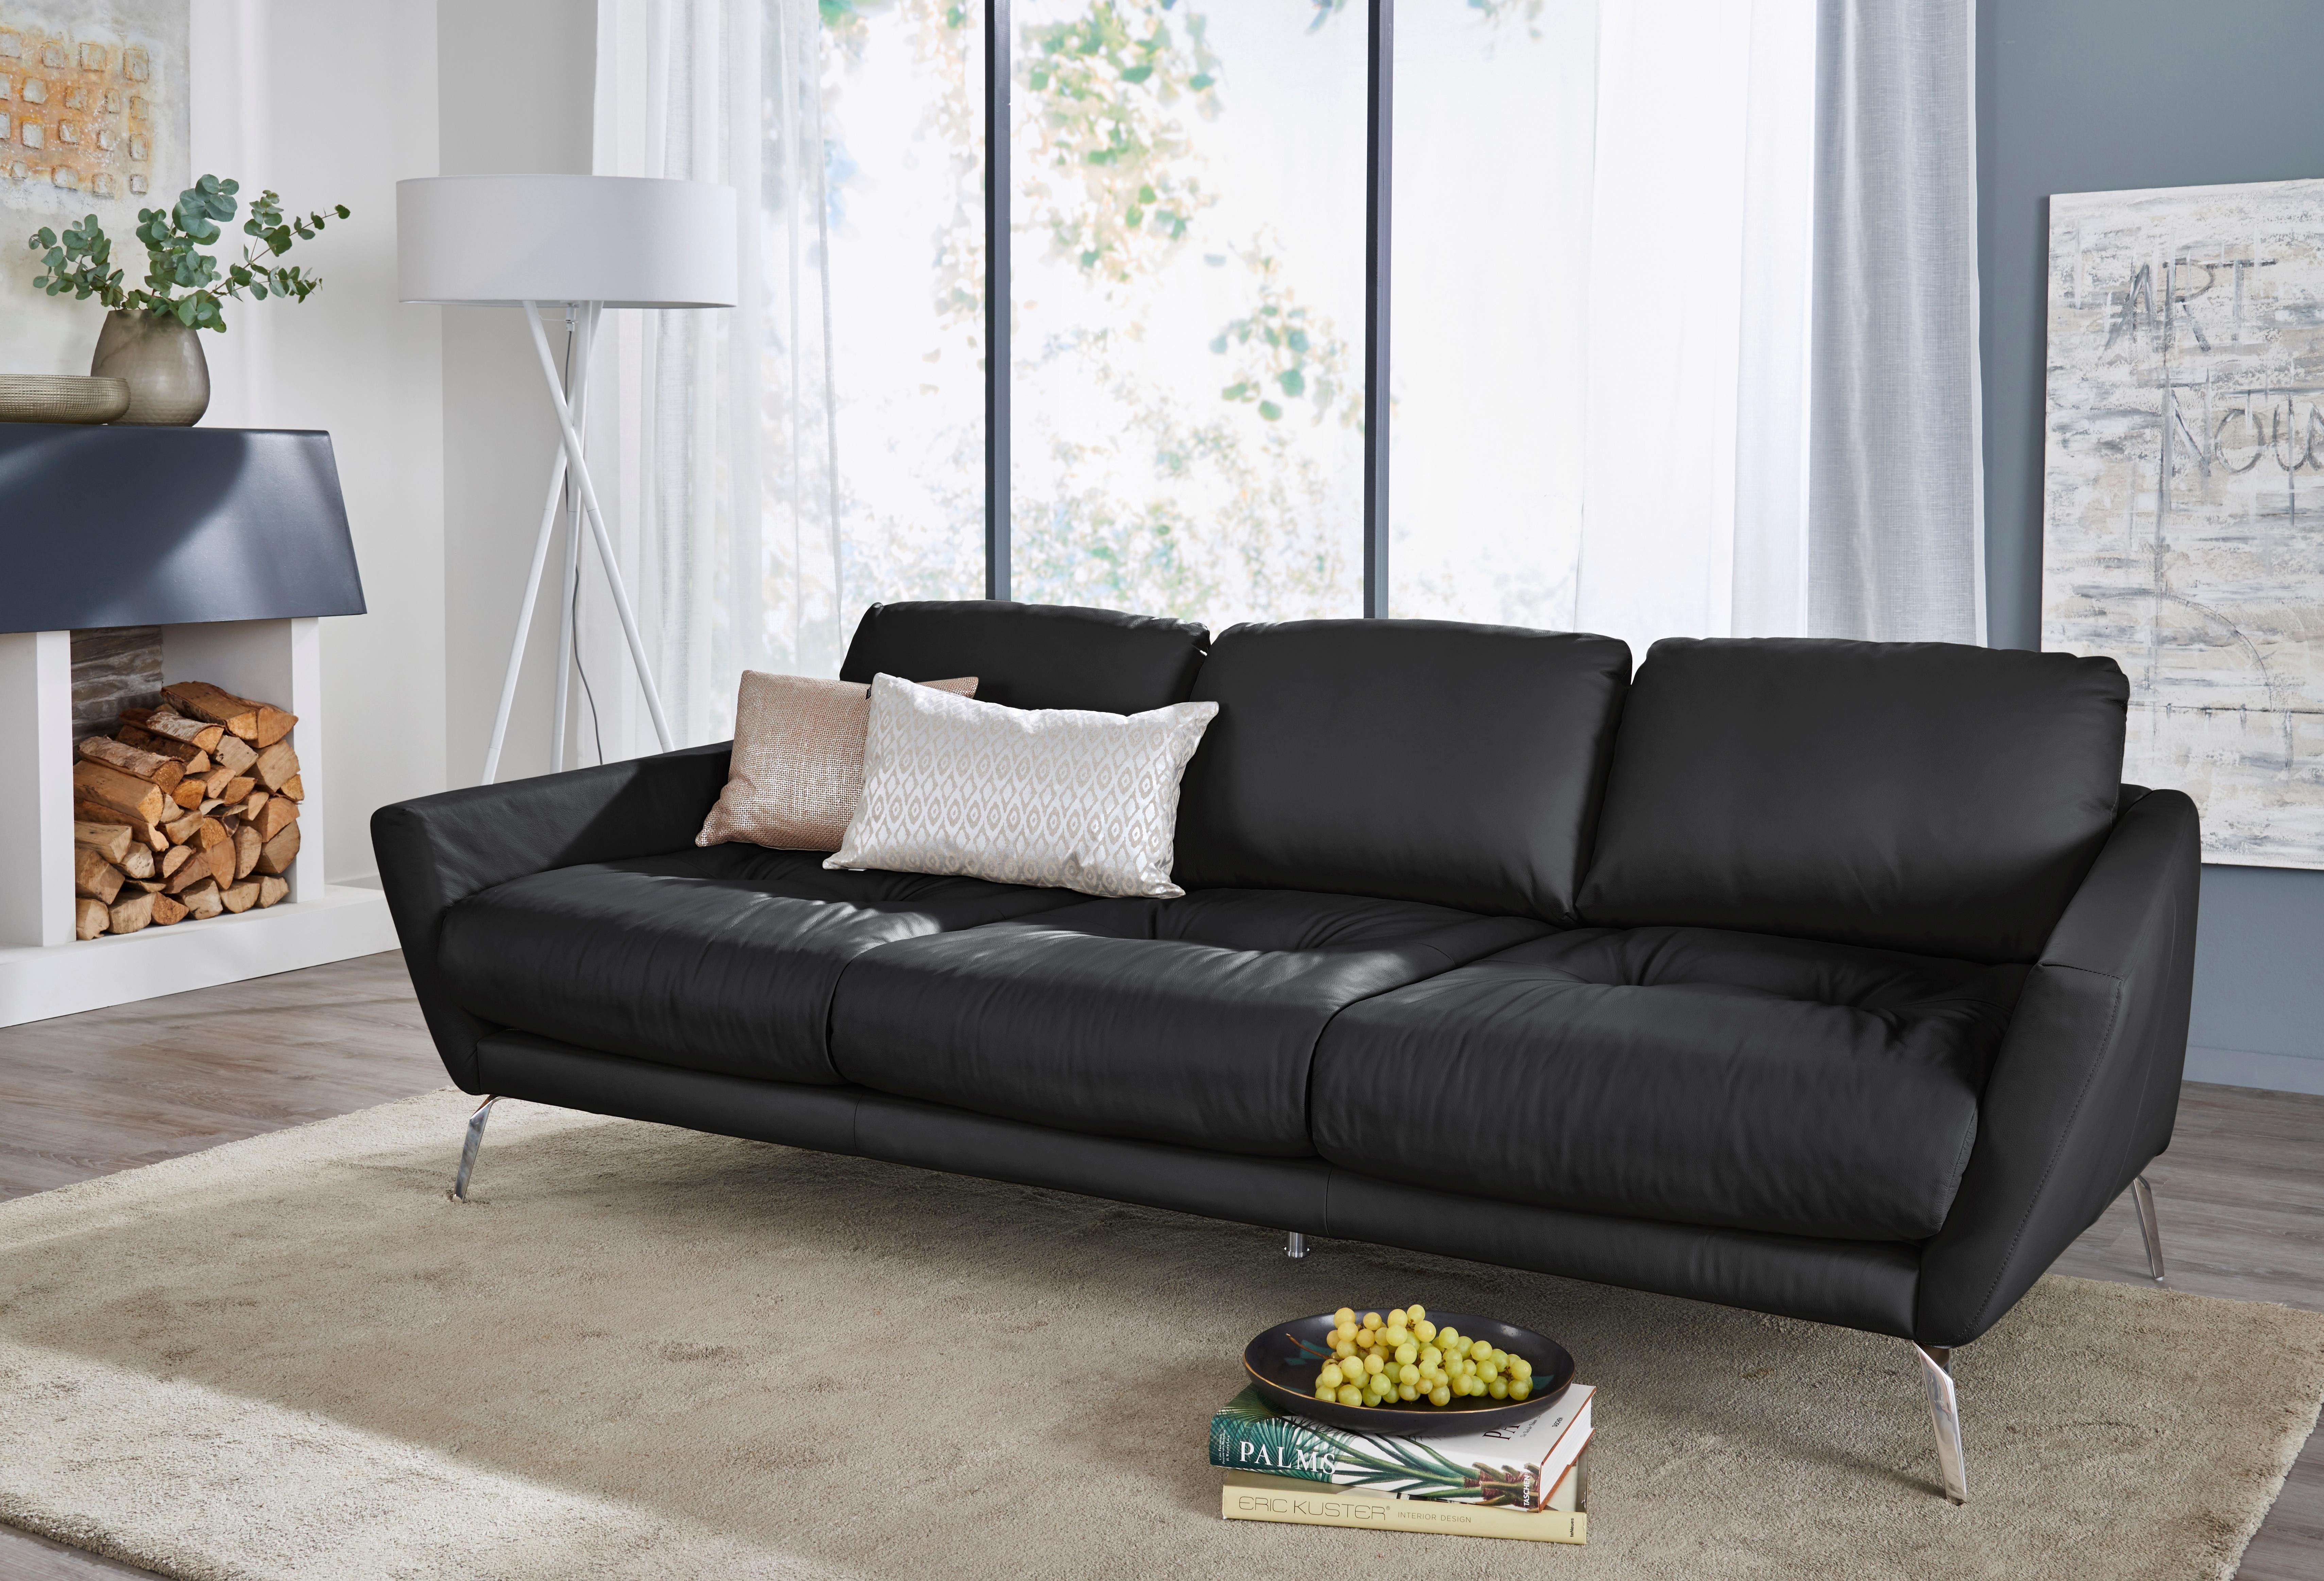 Big-Sofa Chrom mit W.SCHILLIG im dekorativer Heftung glänzend softy, Füße Sitz,